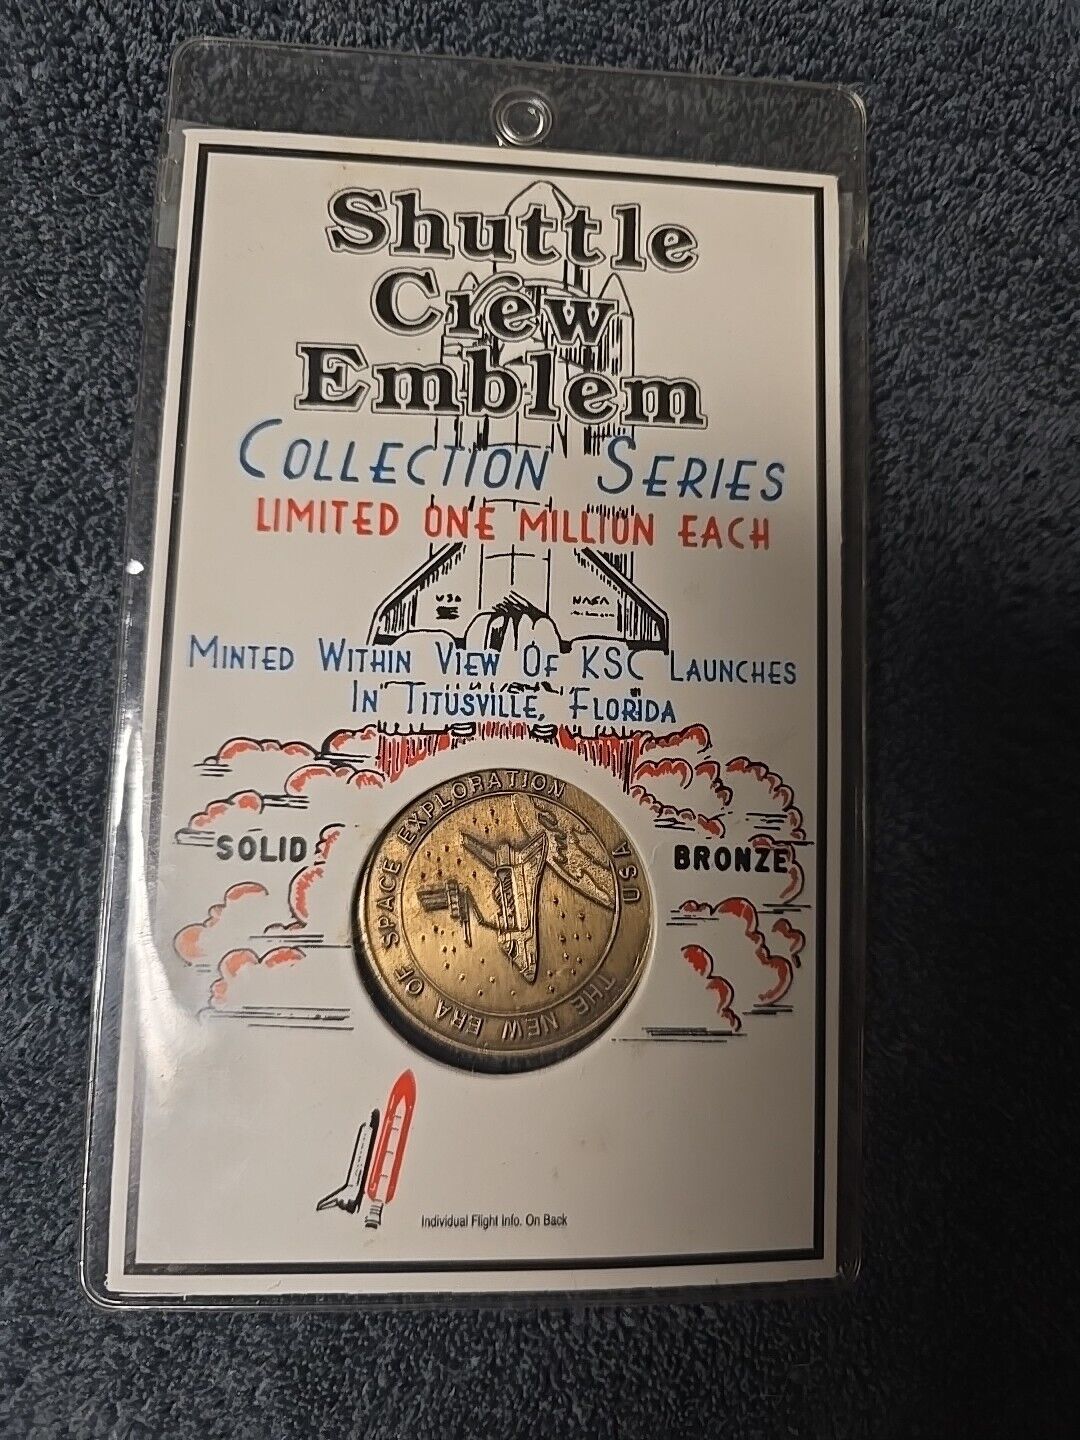 Shuttle Crew Emblem Collection Series Coin Sts 114 *Seller Bonus*